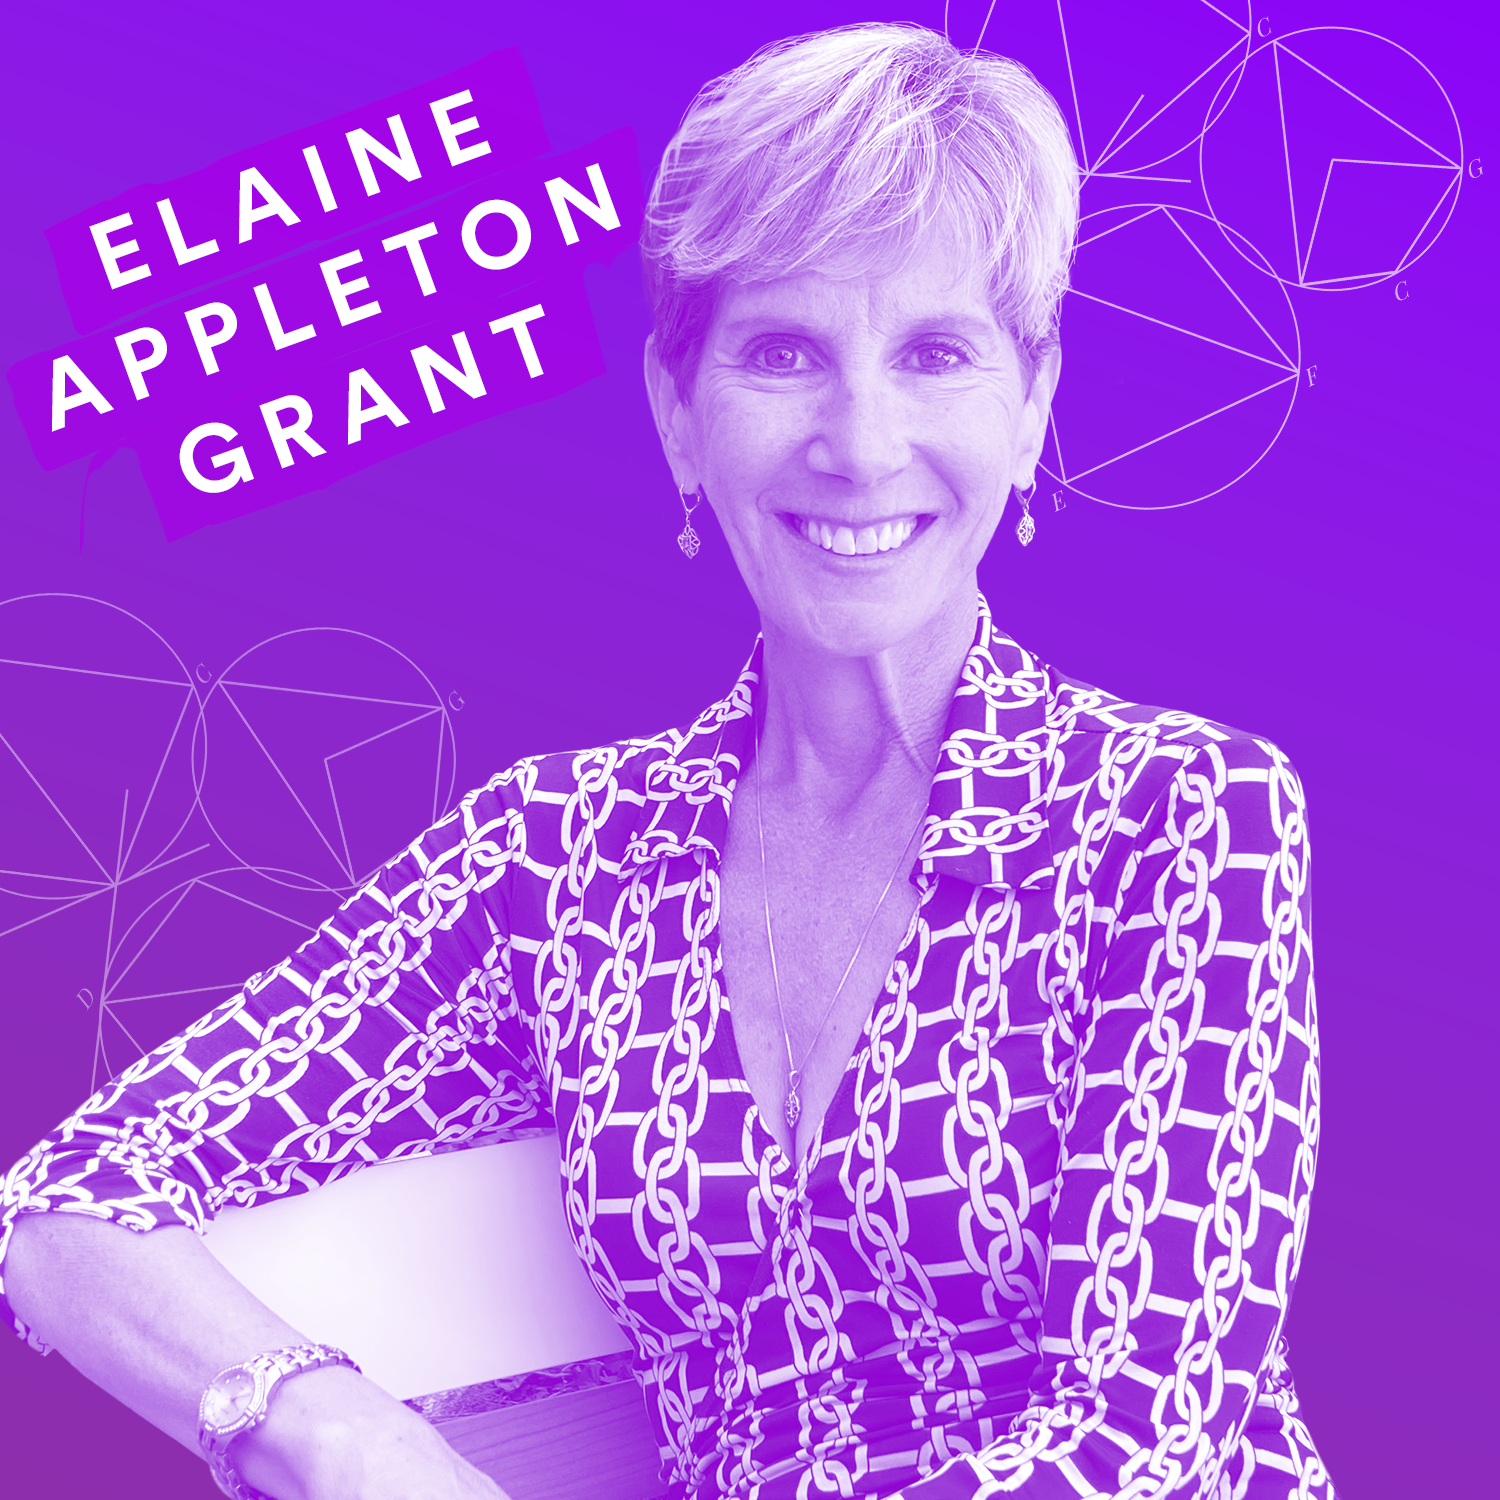 Elaine Appleton Grant headshot